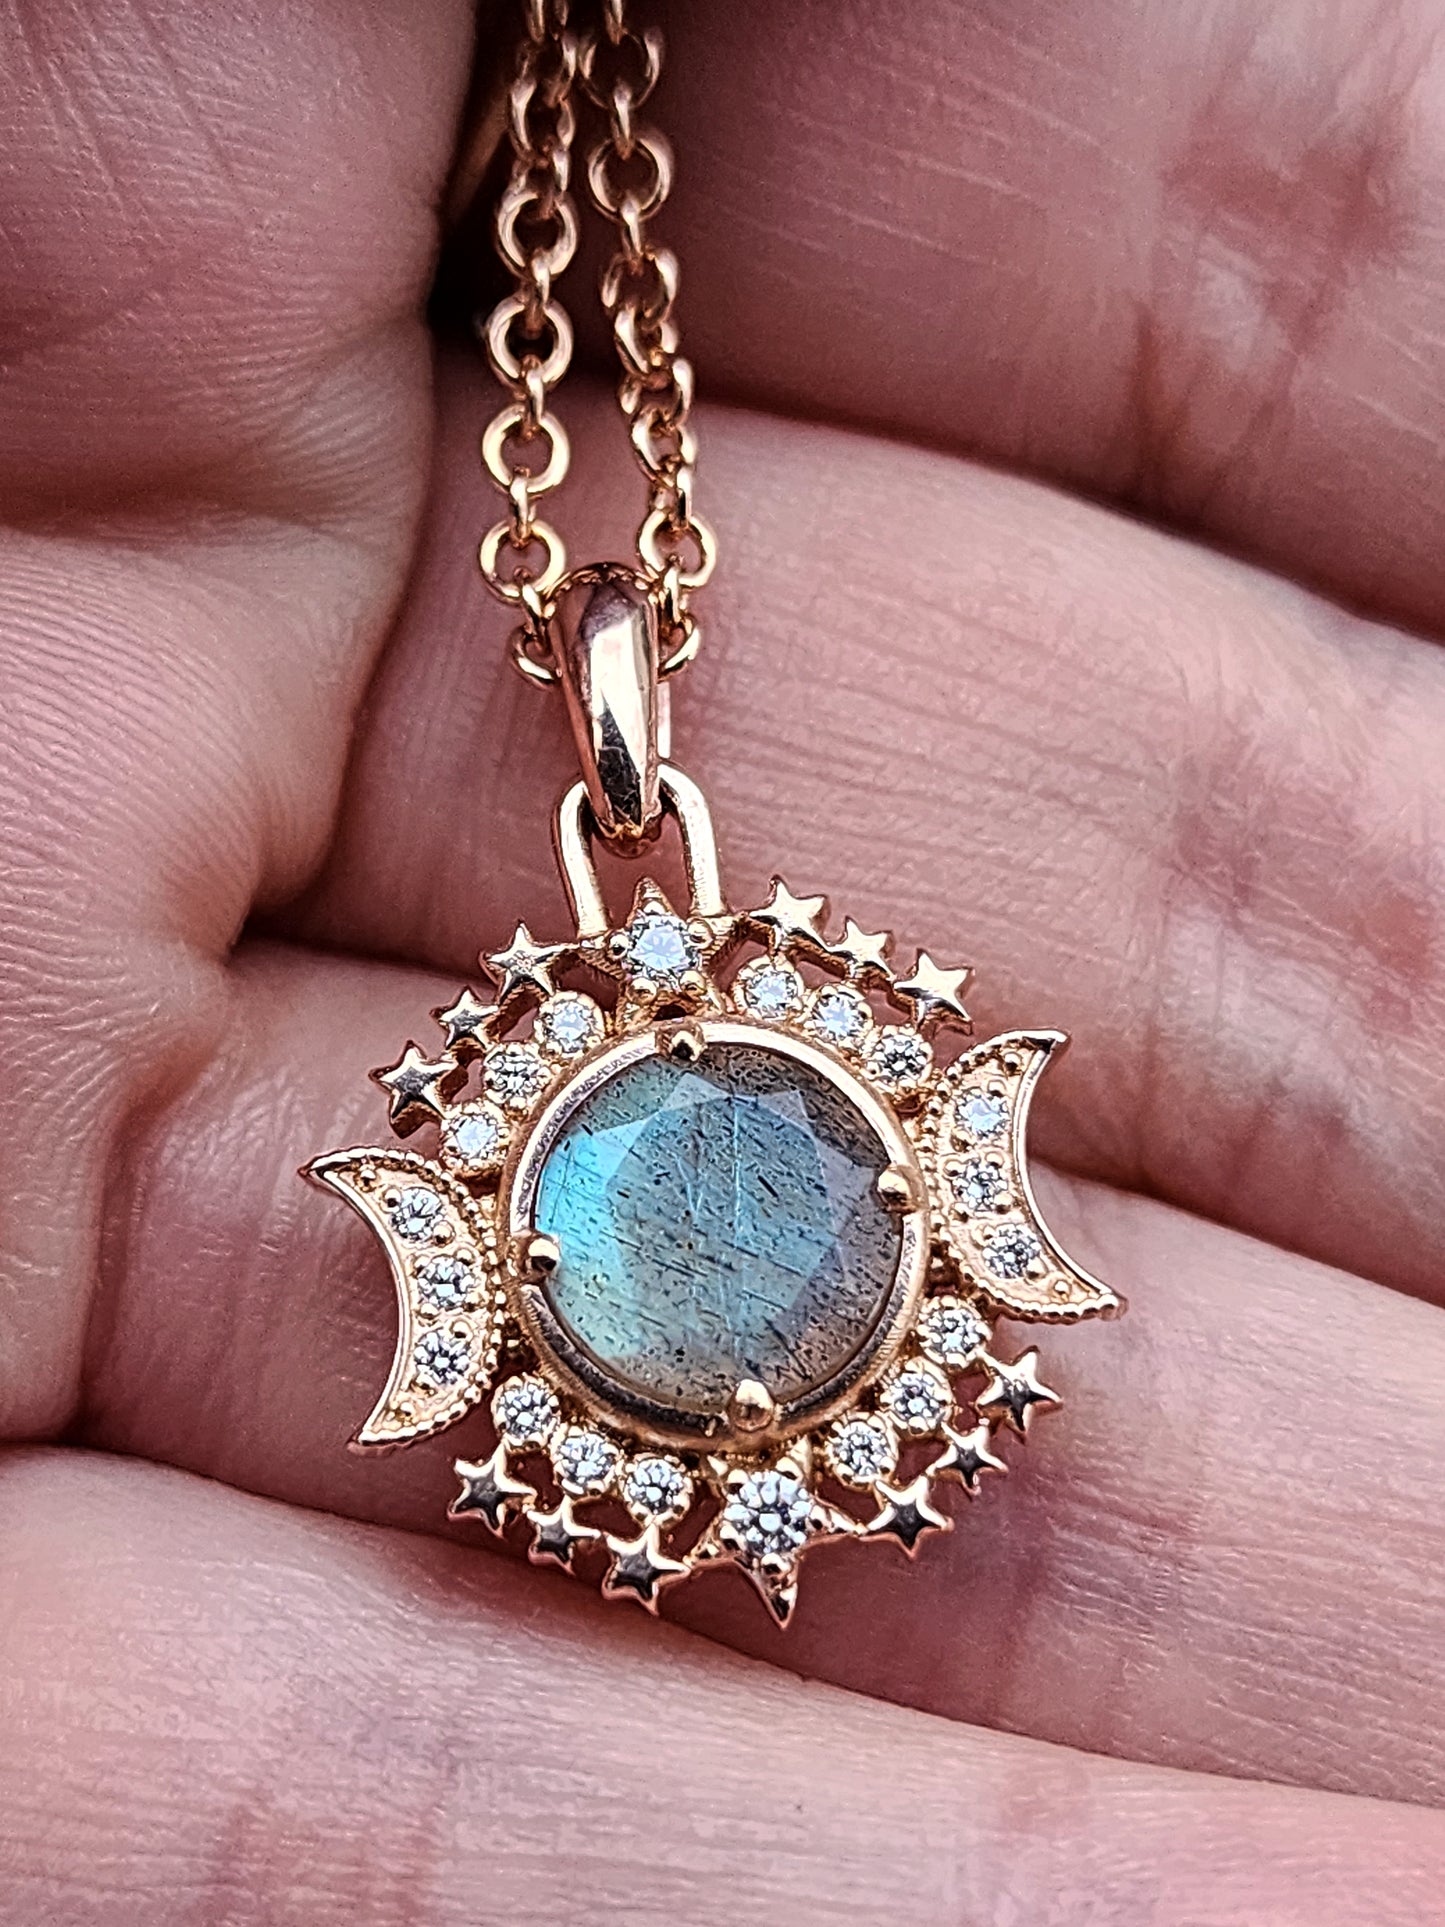 Labradorite Serena Moon and Star Pendant with Diamonds - 14k Yellow Gold, 14k Rose Gold or 14k Palladium White Gold - Celestial Necklace